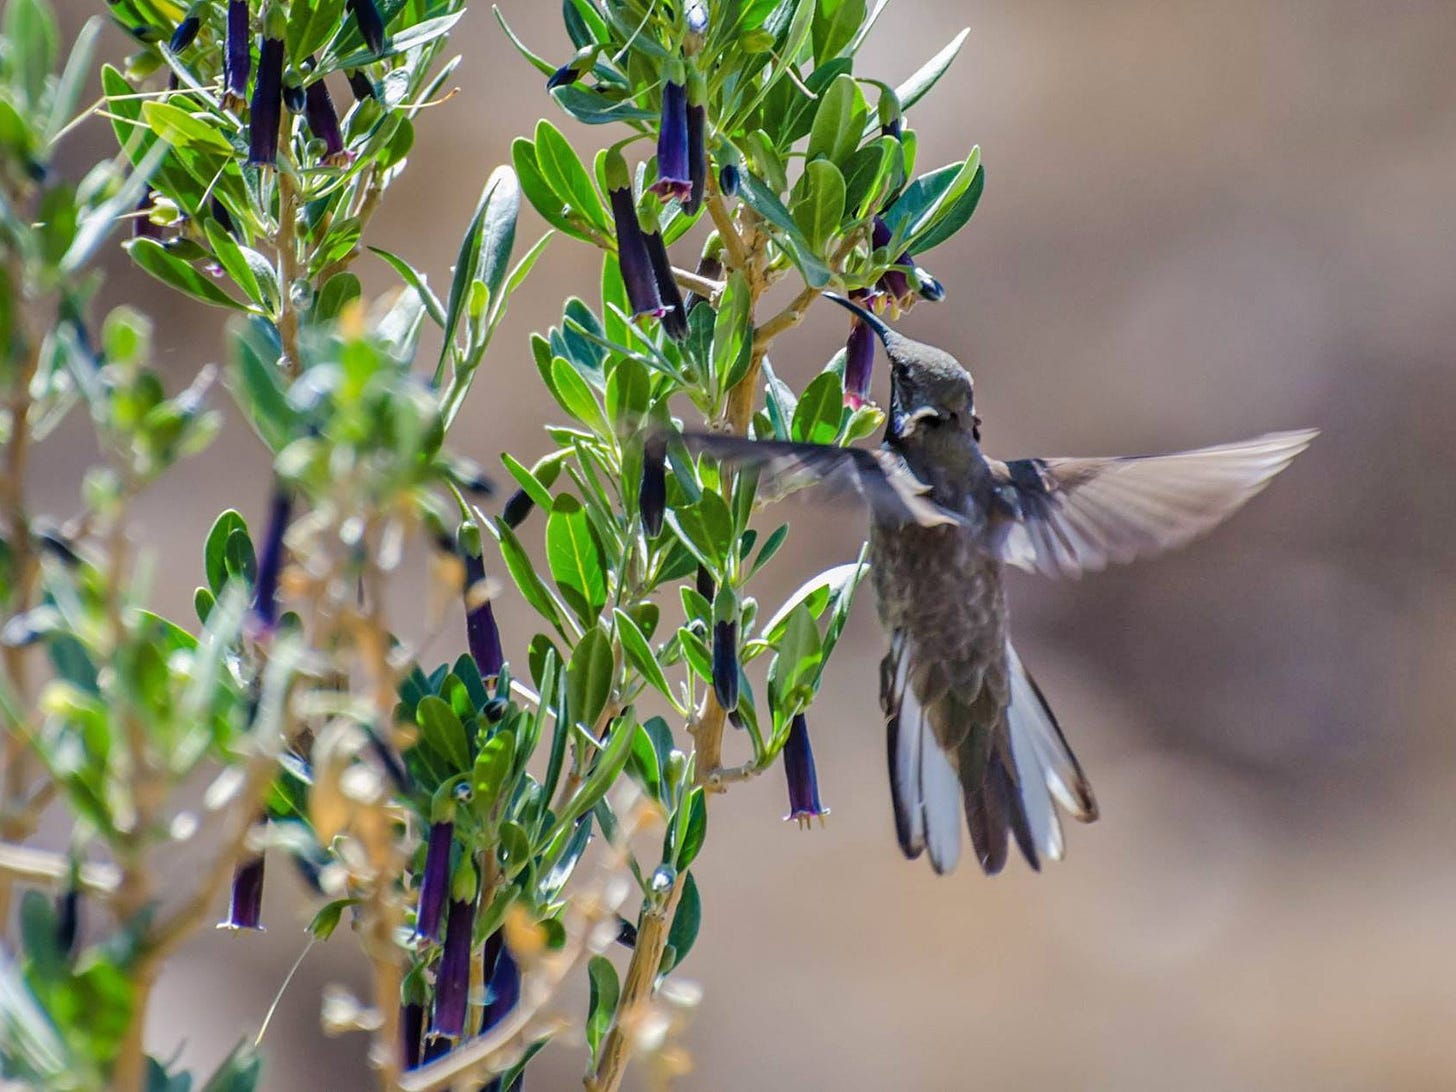 A Hummingbird wit the Andean hillstar #NatureMatters